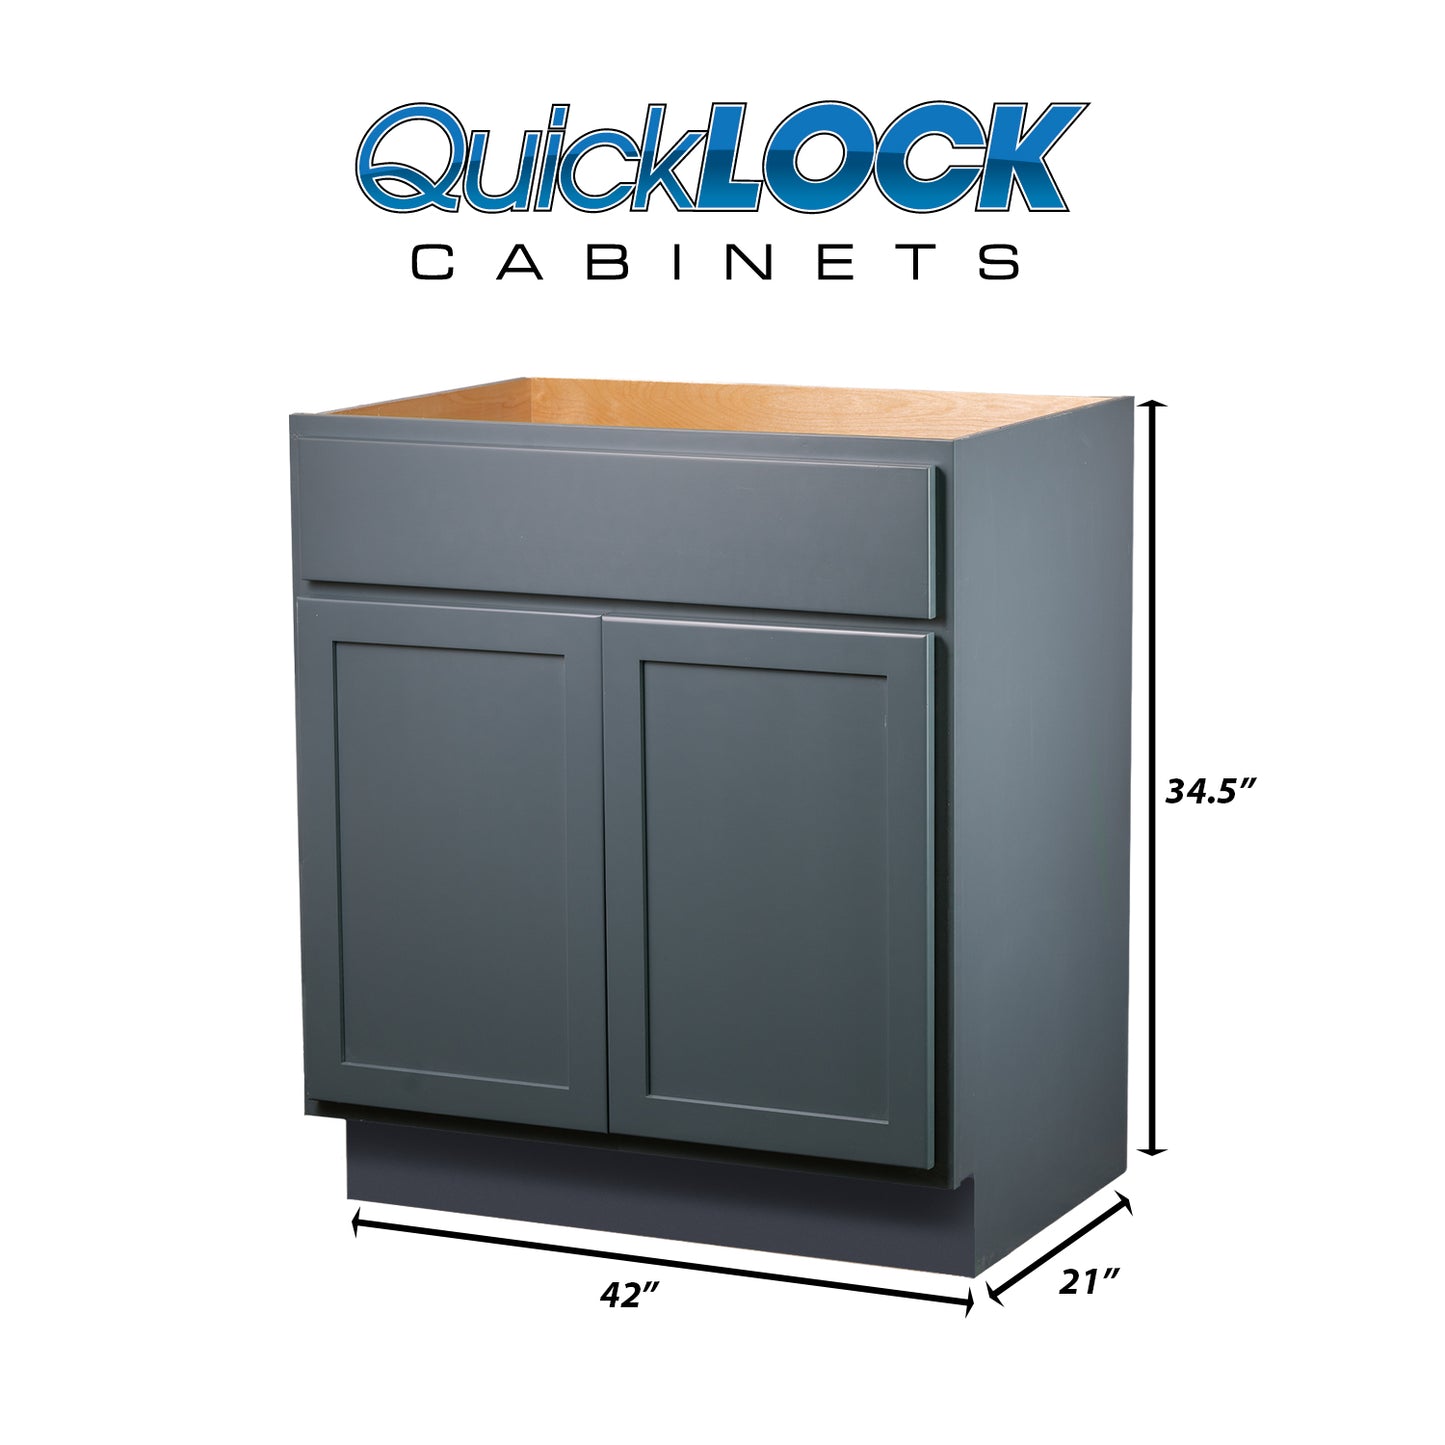 Quicklock RTA (Ready-to-Assemble) Needlepoint Navy Vanity Base Cabinet | 42"Wx34.5"Hx21"D